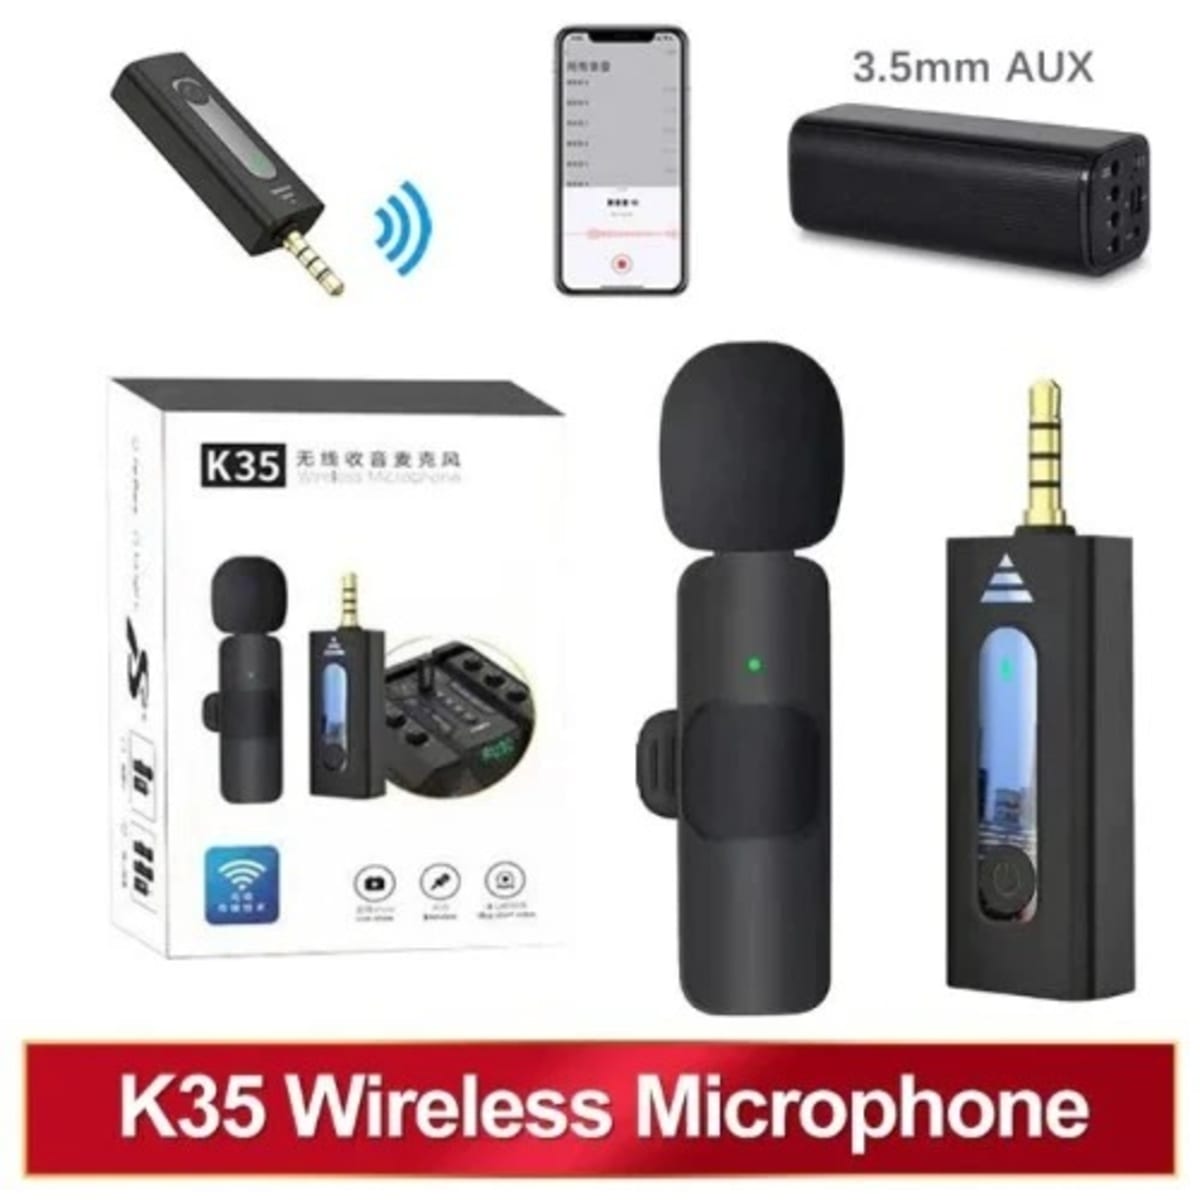 Lavalier Microphone  Konga Online Shopping